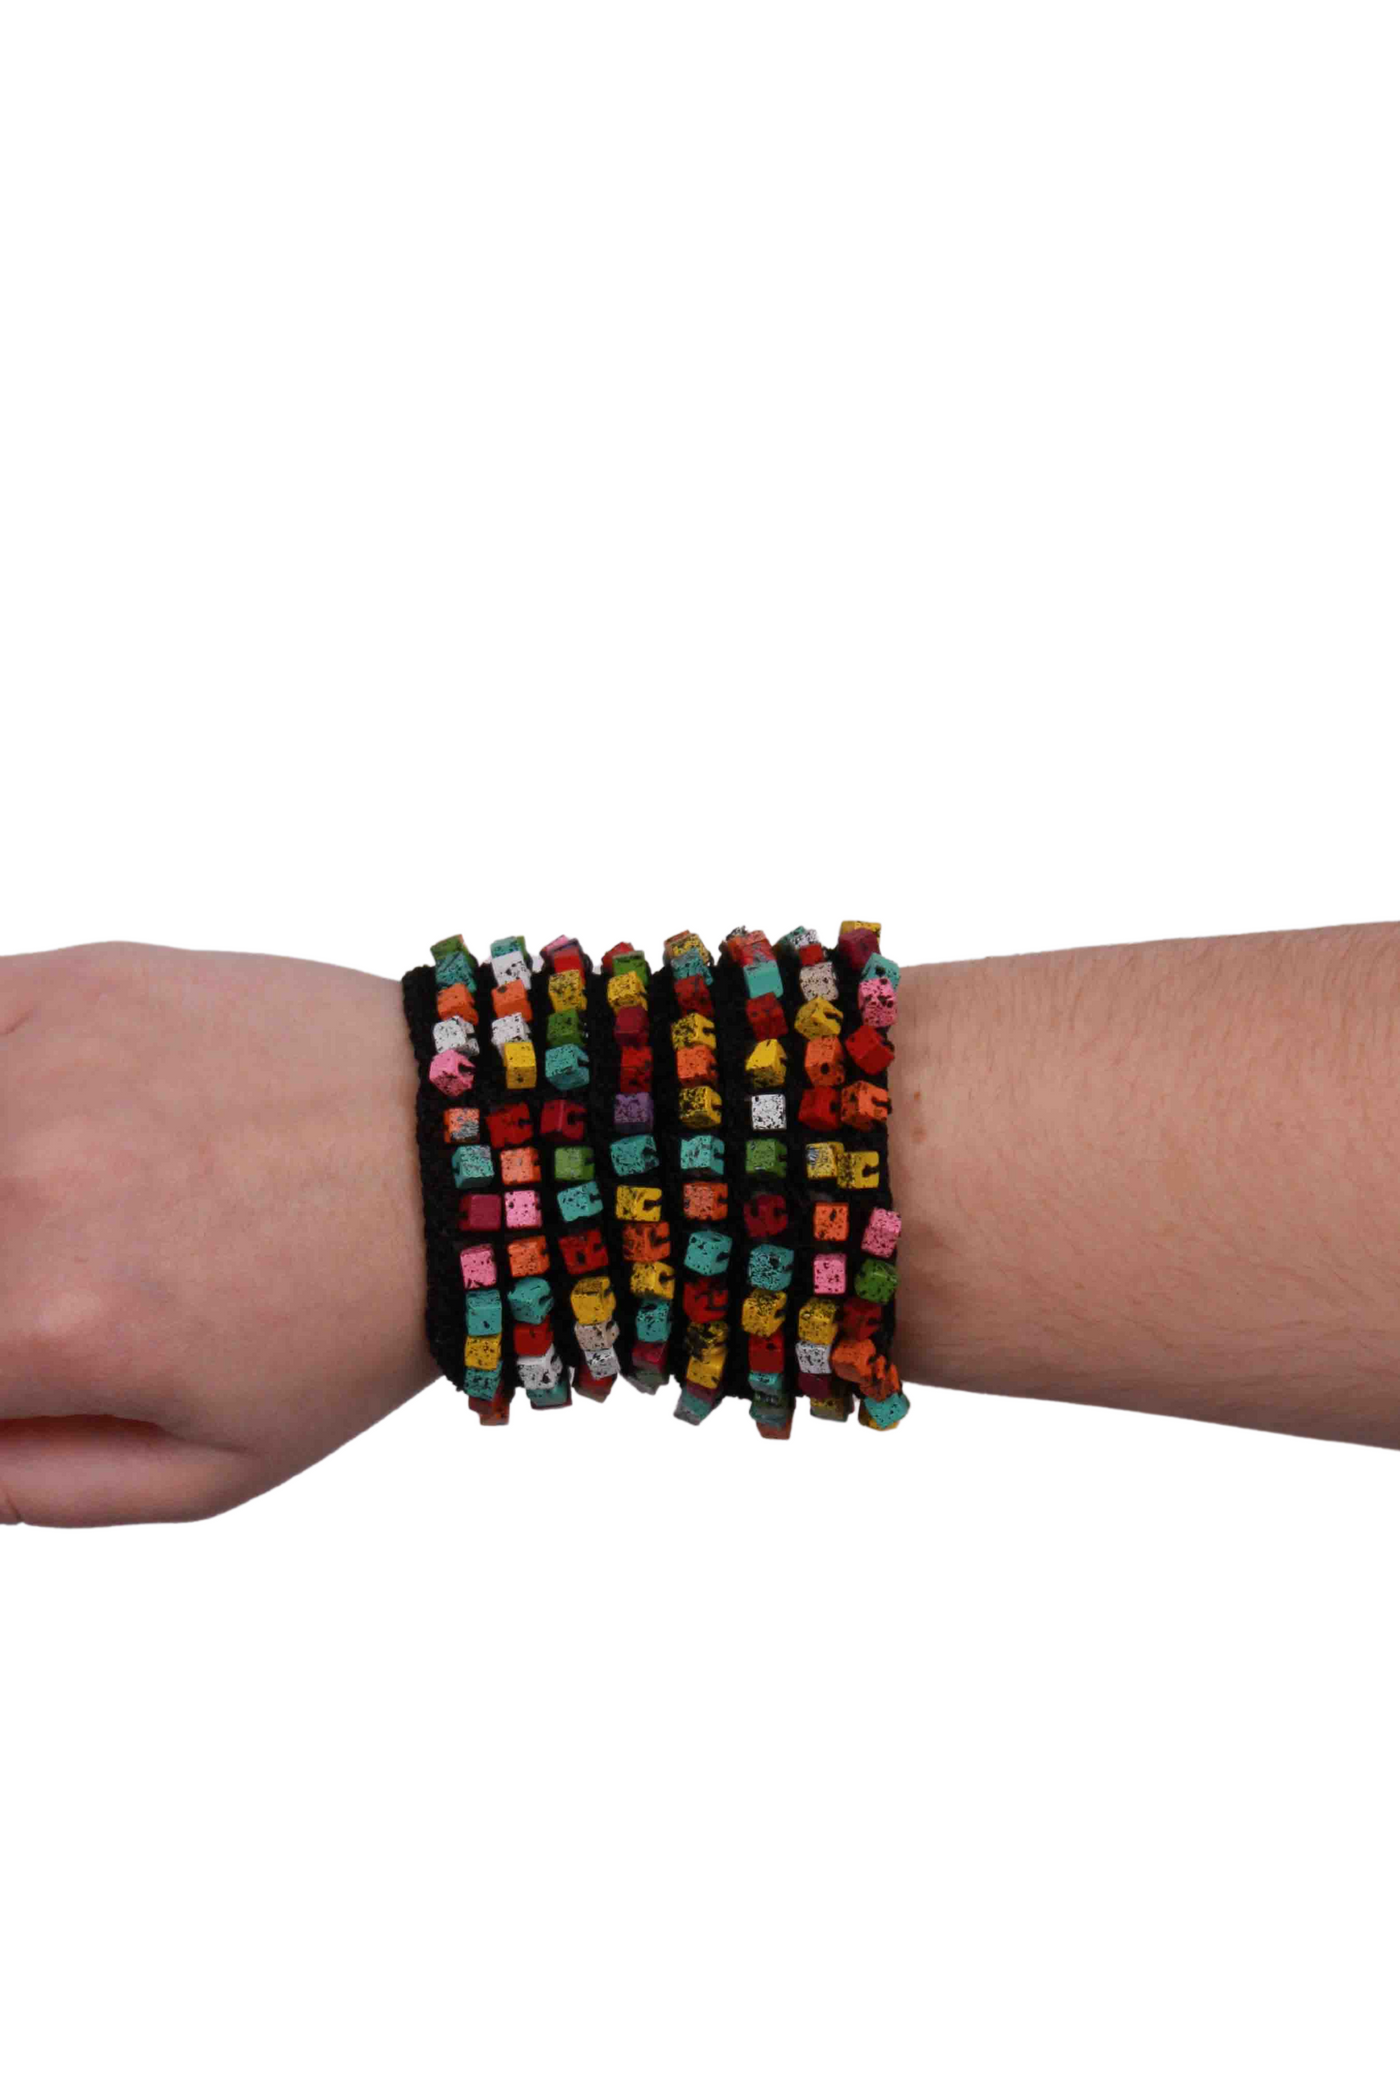 Pashmina Cuff Bracelet Multicolored by Jianhui London